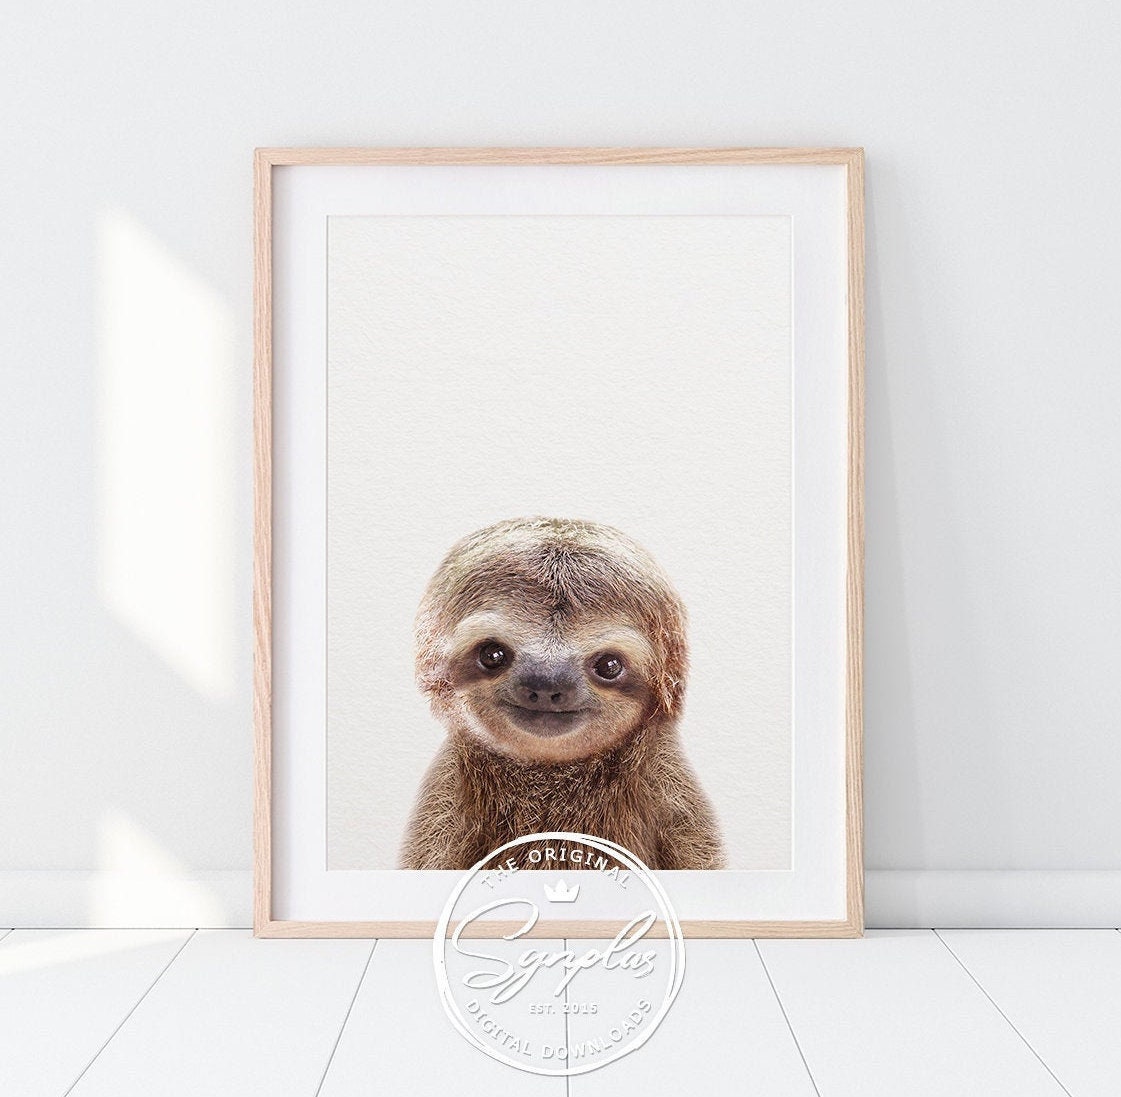 Sloth Print-Sloth-Nursery Decor-Nursery Wall Art-Succulent-Succulent Print-Cactus-Cactus Print-Pinata-Sloth Wall Art-Animal Art-Paper Sloth